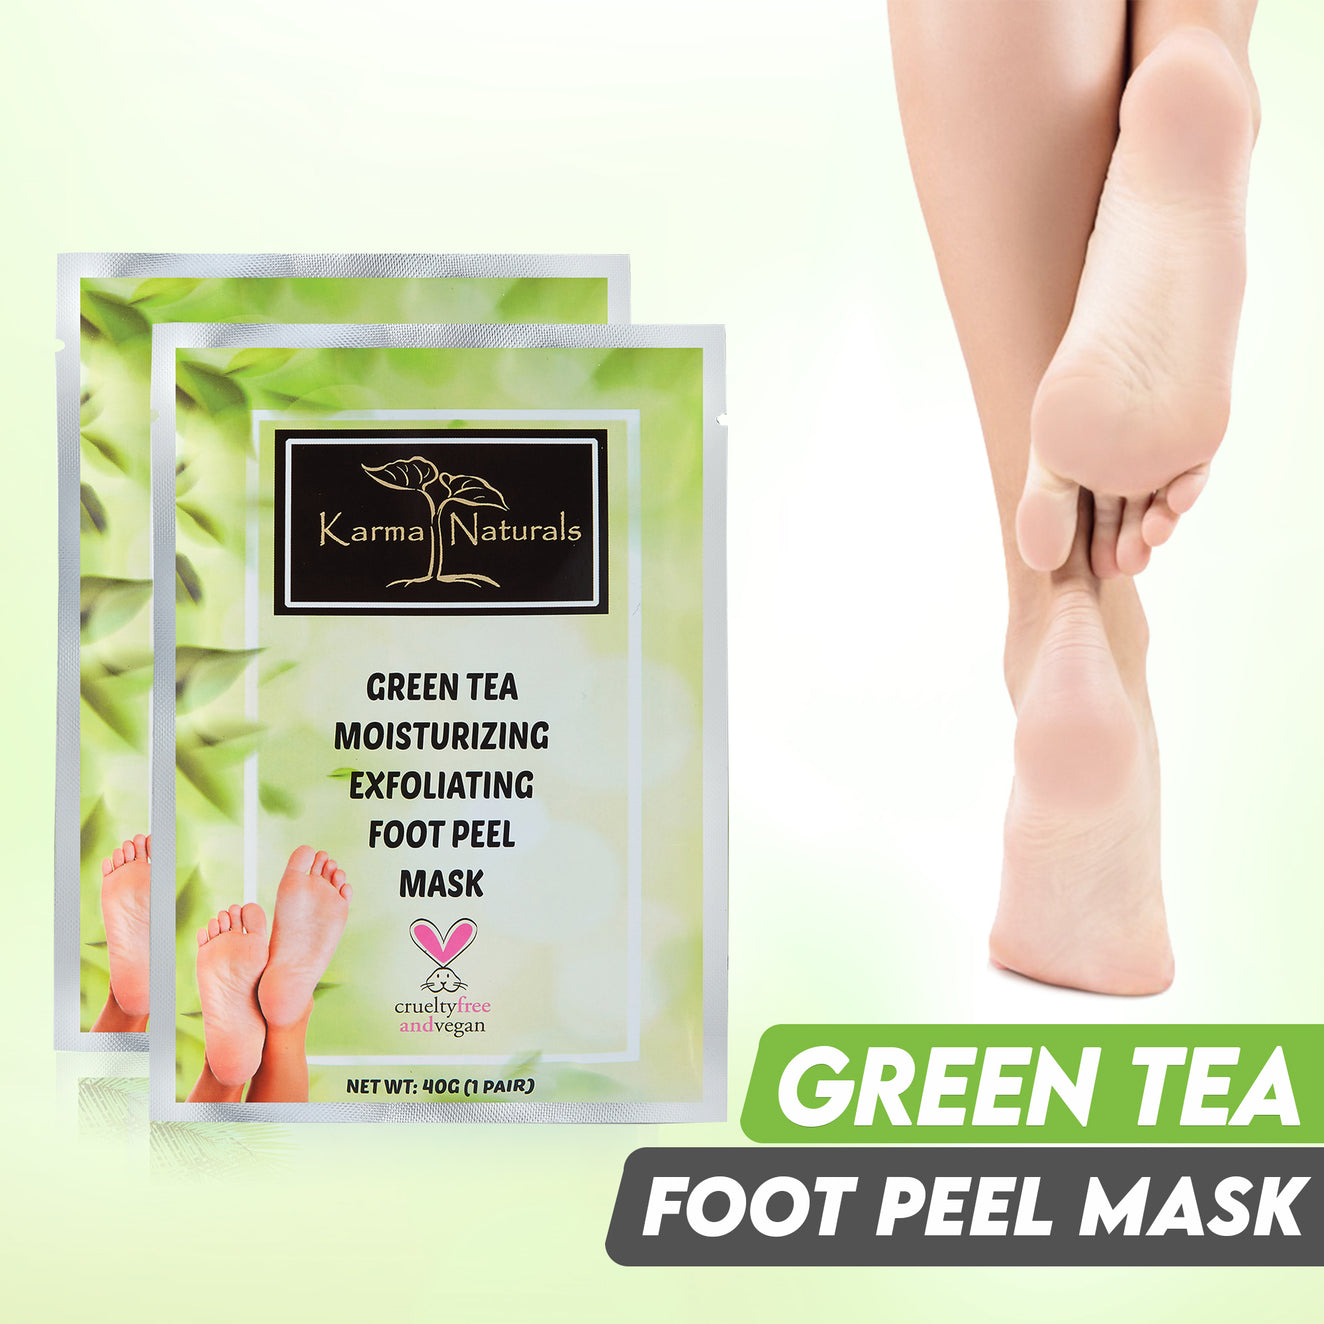 Karma Green Tea Foot Peel Mask – Helps Remove Callus & Repair Cracked Heels by Karma Organic – For Men & Women [2 Pack]